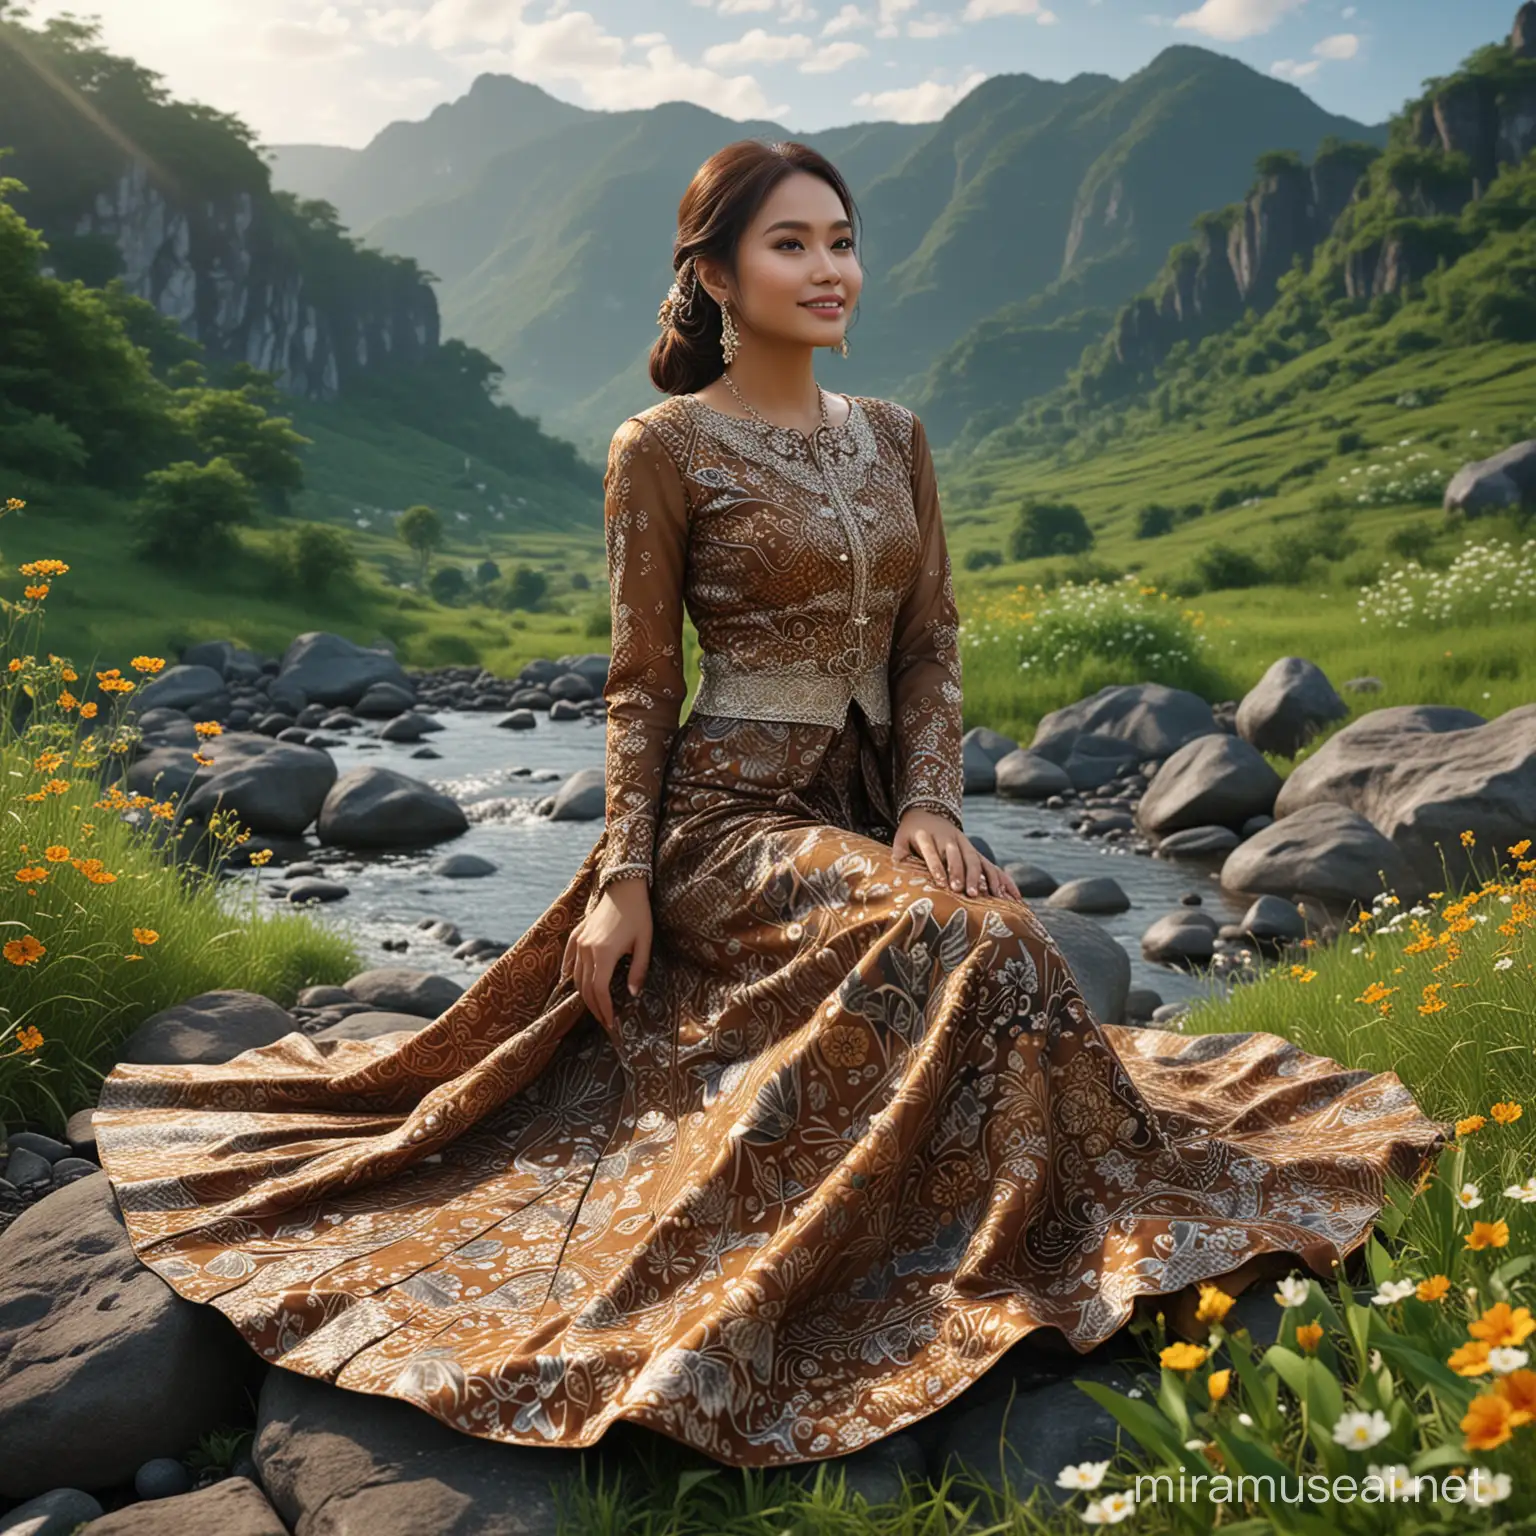 Indonesian Woman in Batik Dress Admiring Nature on Rocky Hill